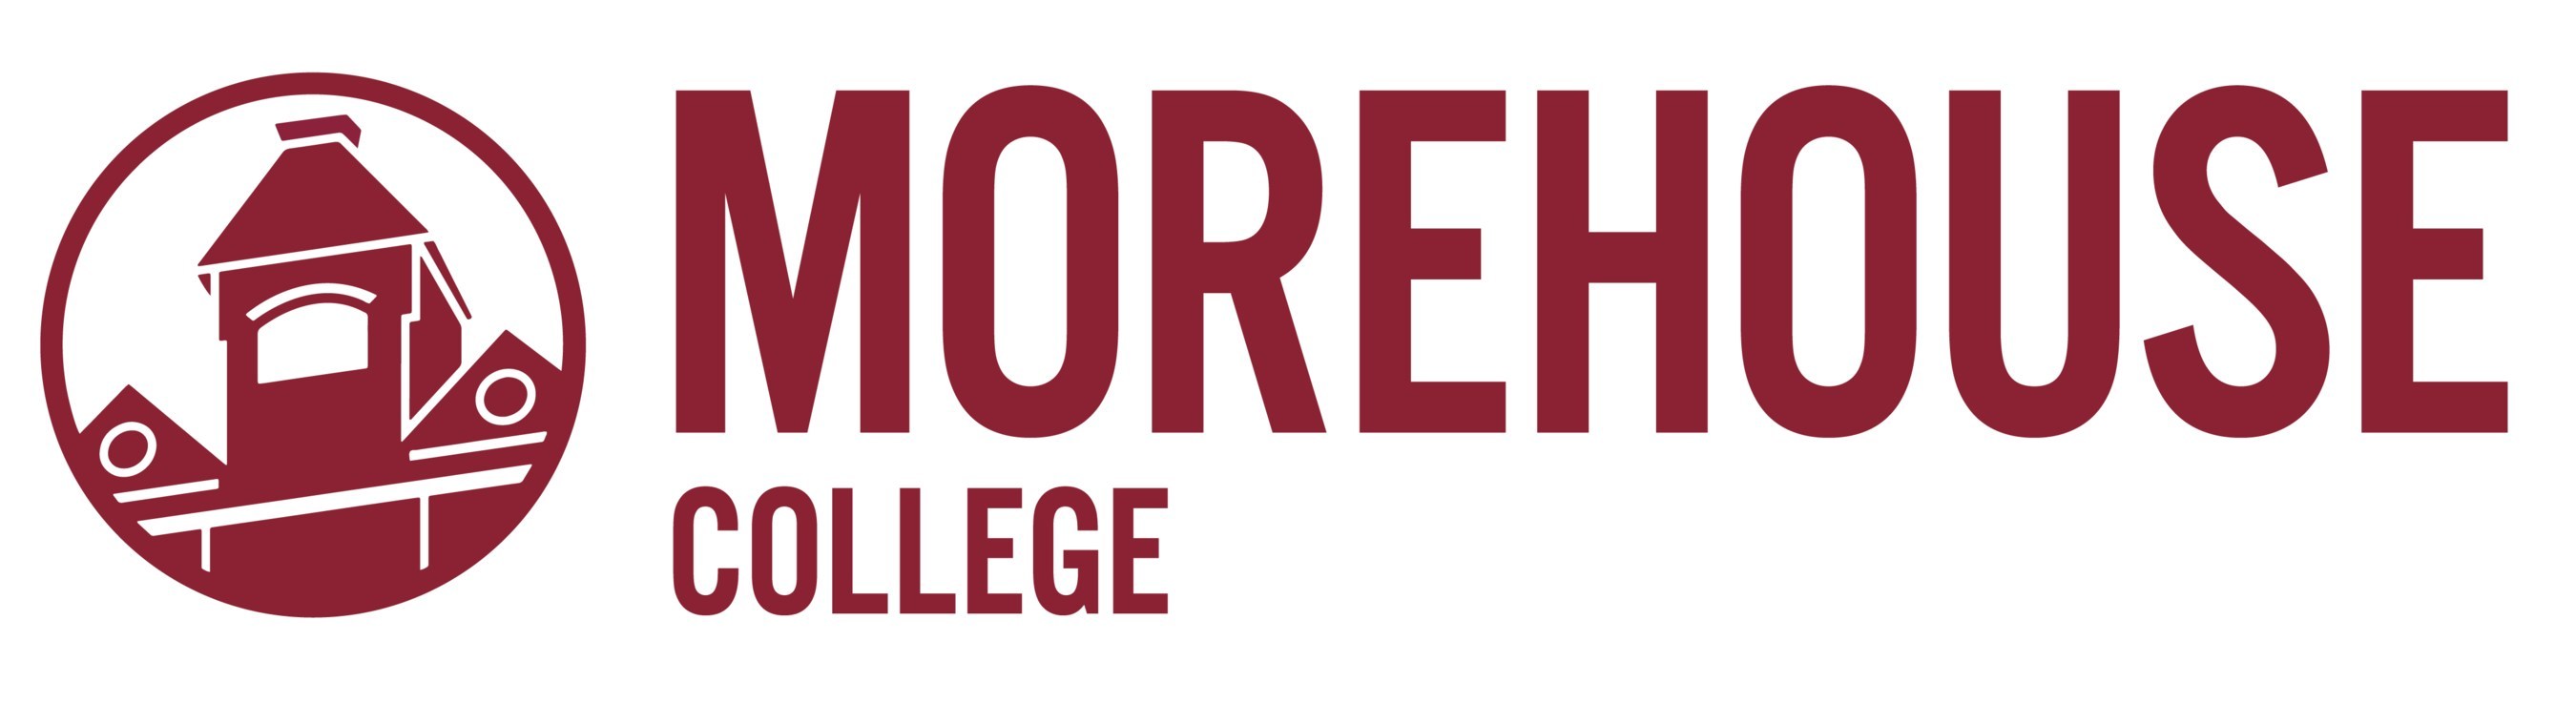 Morehouse College Announces Online Undergraduate Experience for Non